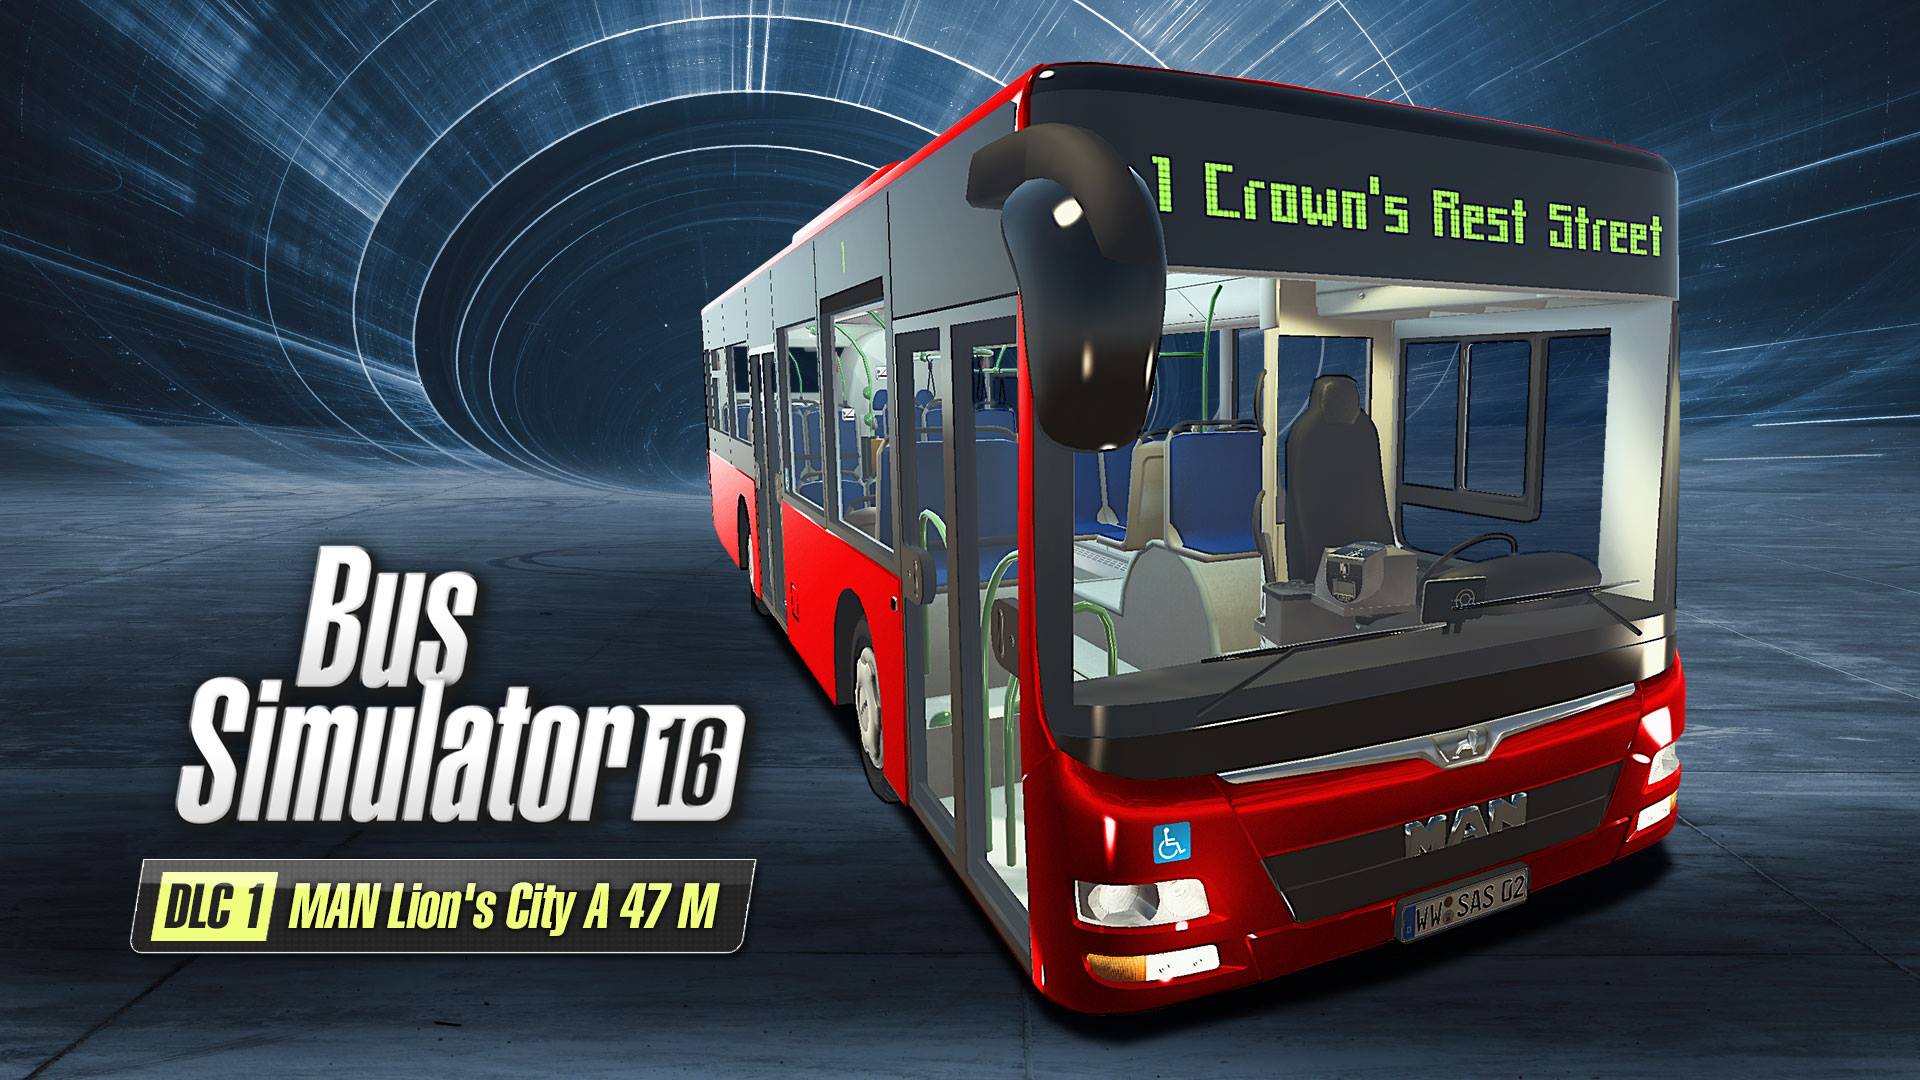 bus-simulator-16-dlc1-man-lions-city-a-47-m